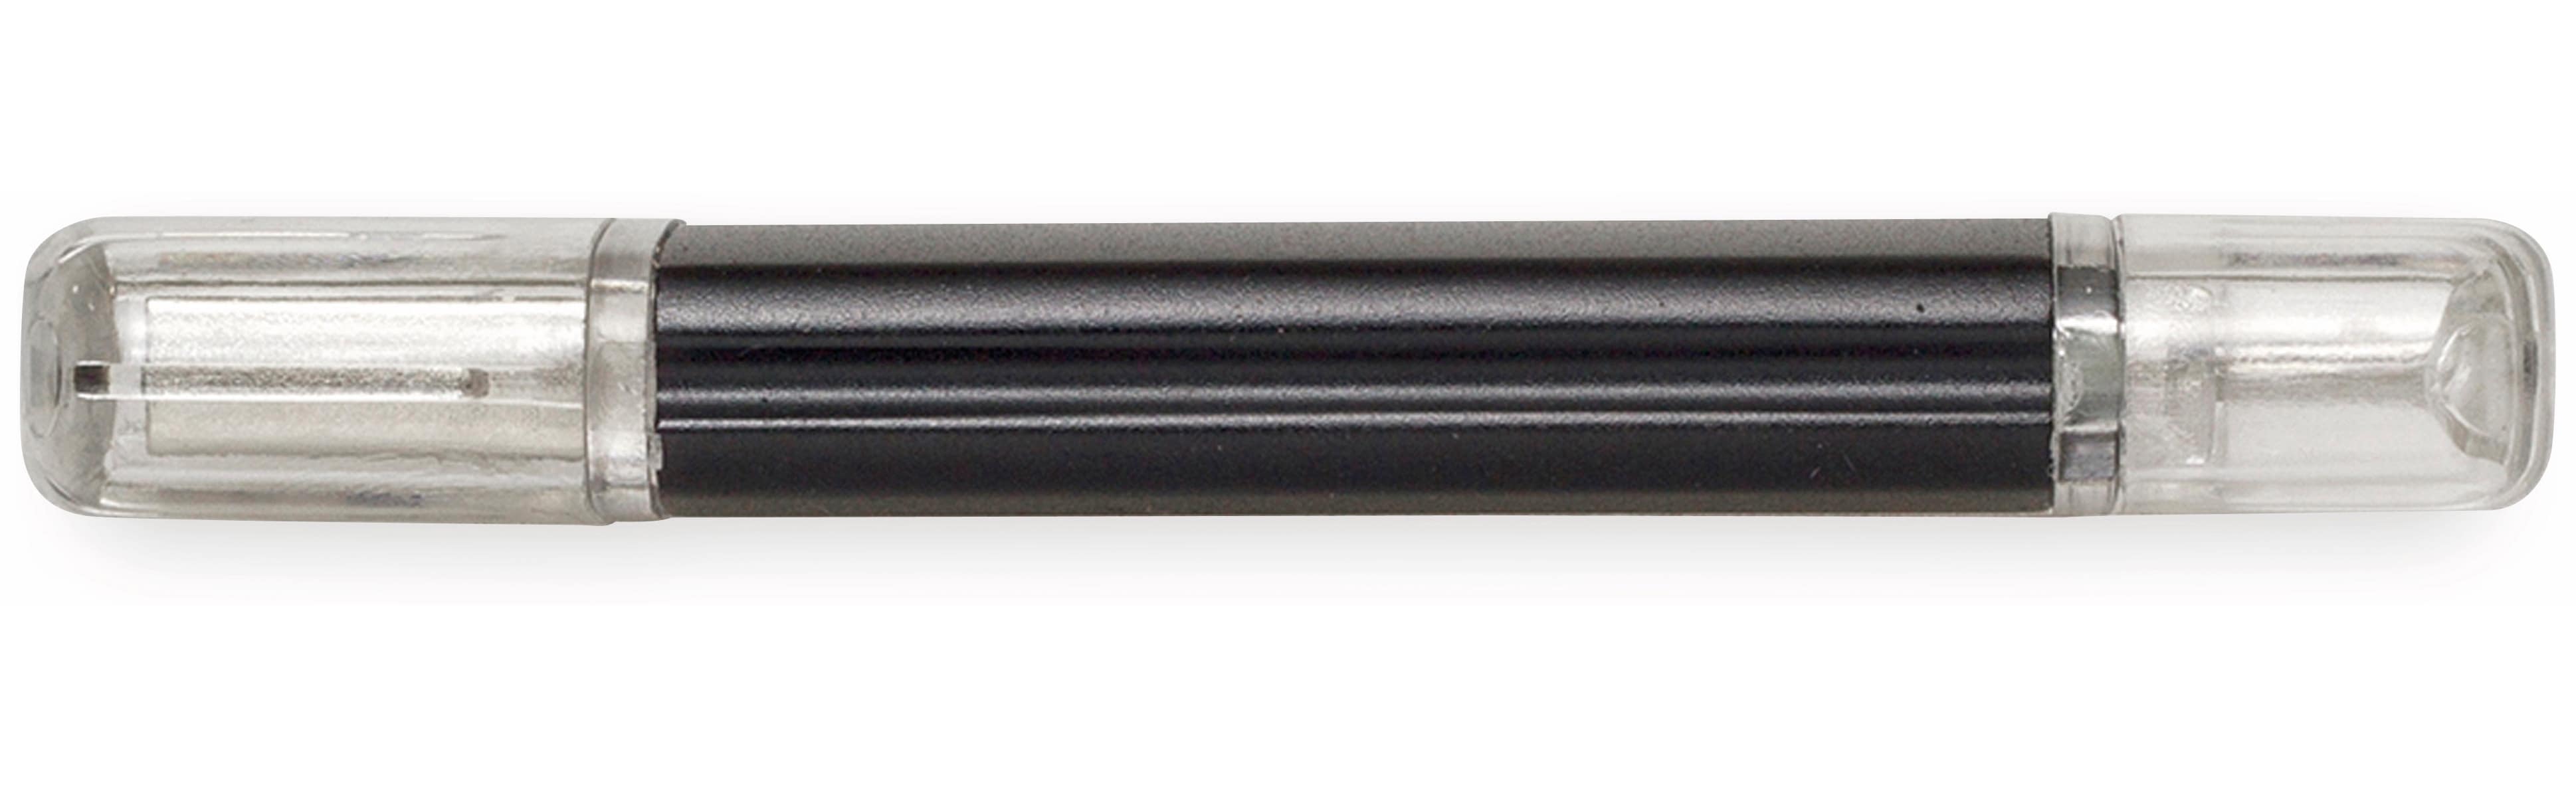 VERICO USB3.0 Stick Hybrid Type C, 64 GB, schwarz